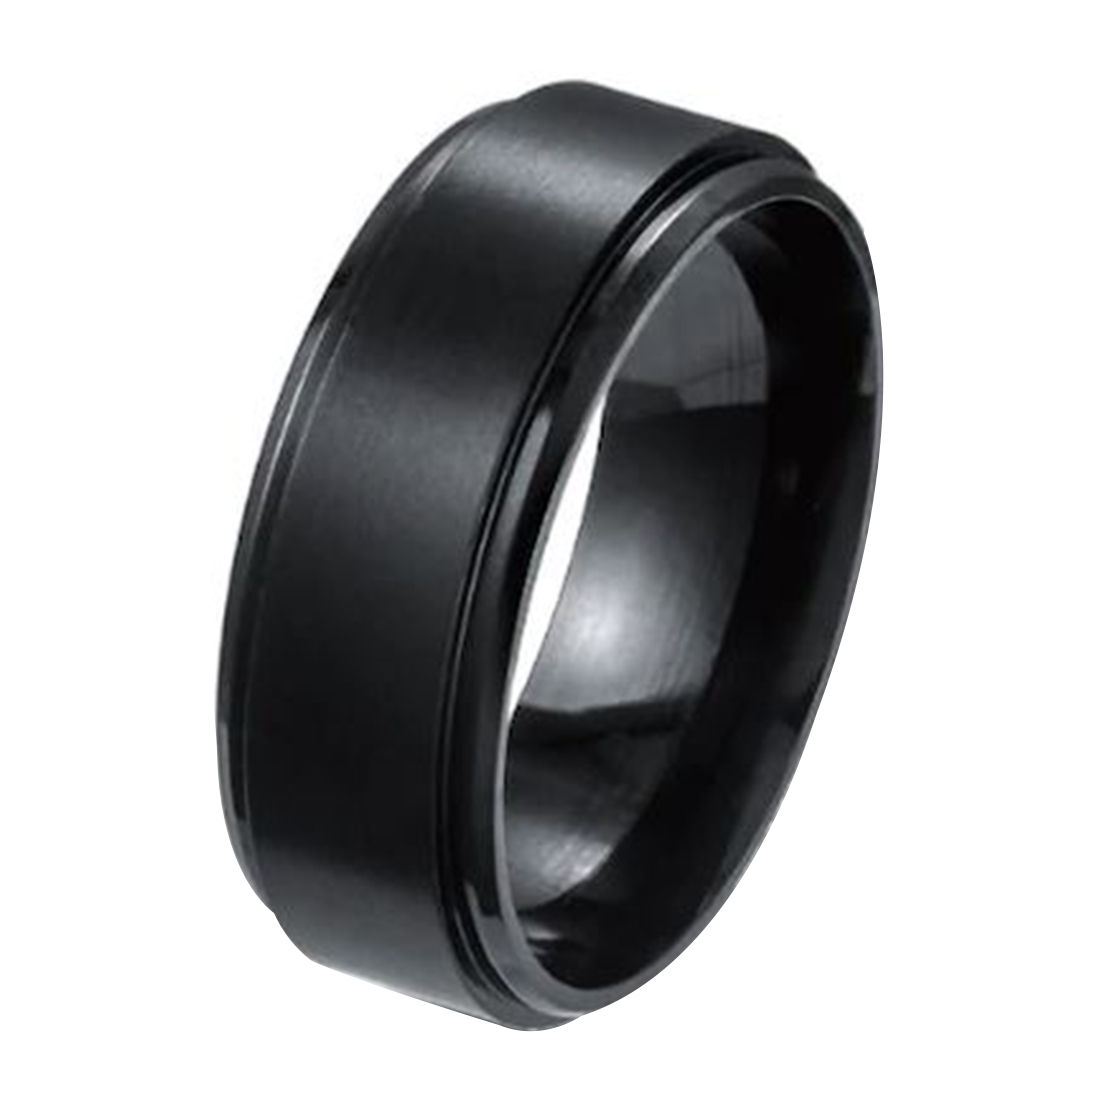 Meolin Black Titanium Steel Ring Men Matte Finished Engagement Ring Wedding  Band,Black,Size 7 | Amazon.com